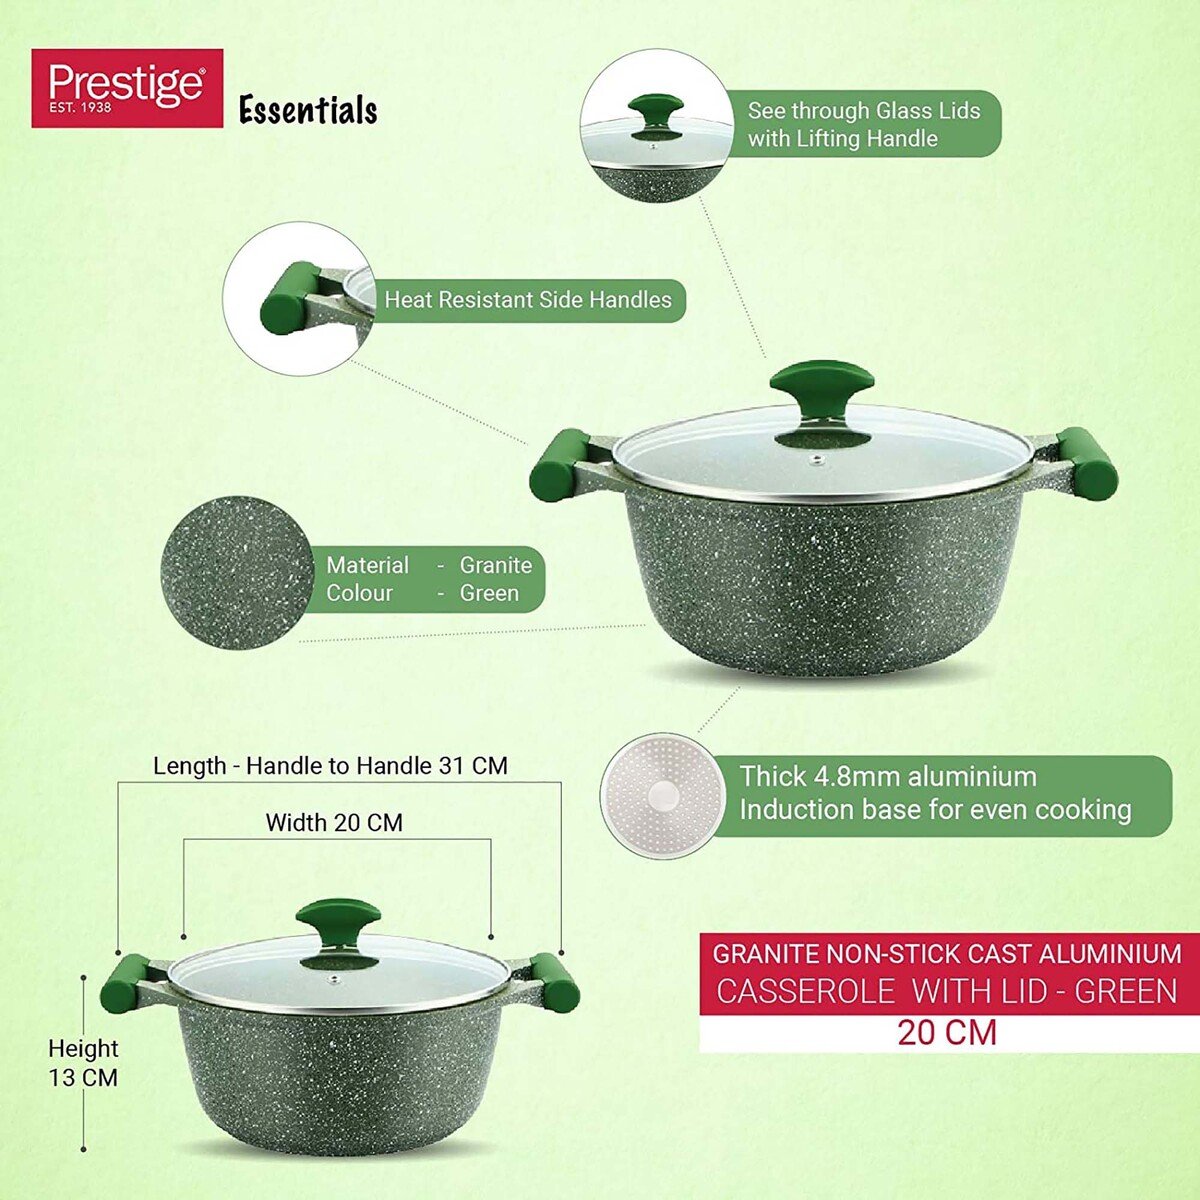 Prestige Essentials Granite Non-Stick Cast Aluminium Casserole with Lid, 20 cm, Green, PR81108